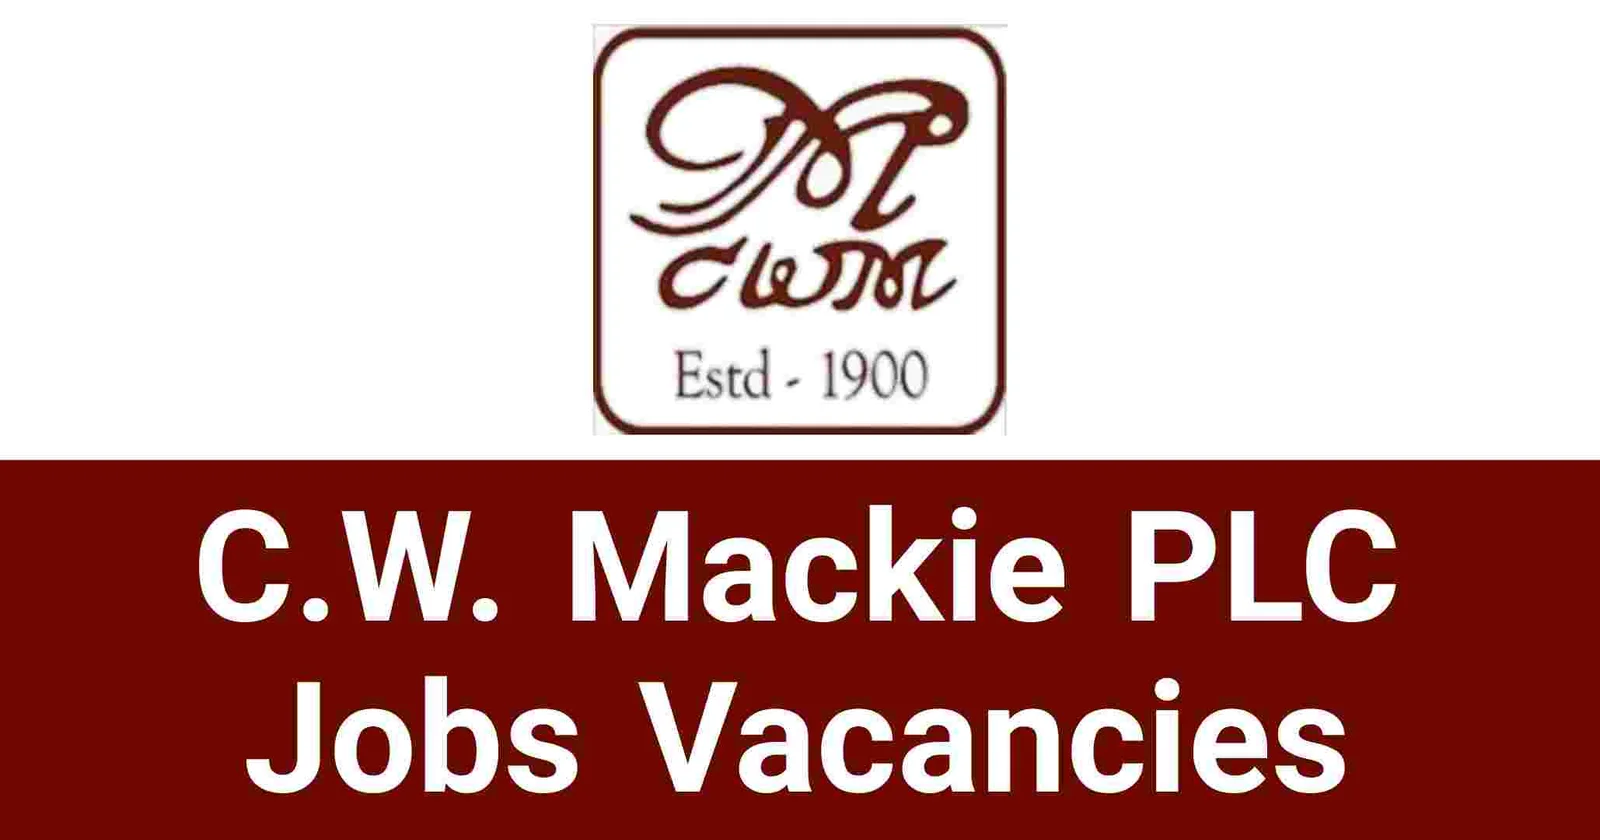 C W Mackie PLC Jobs Vacancies